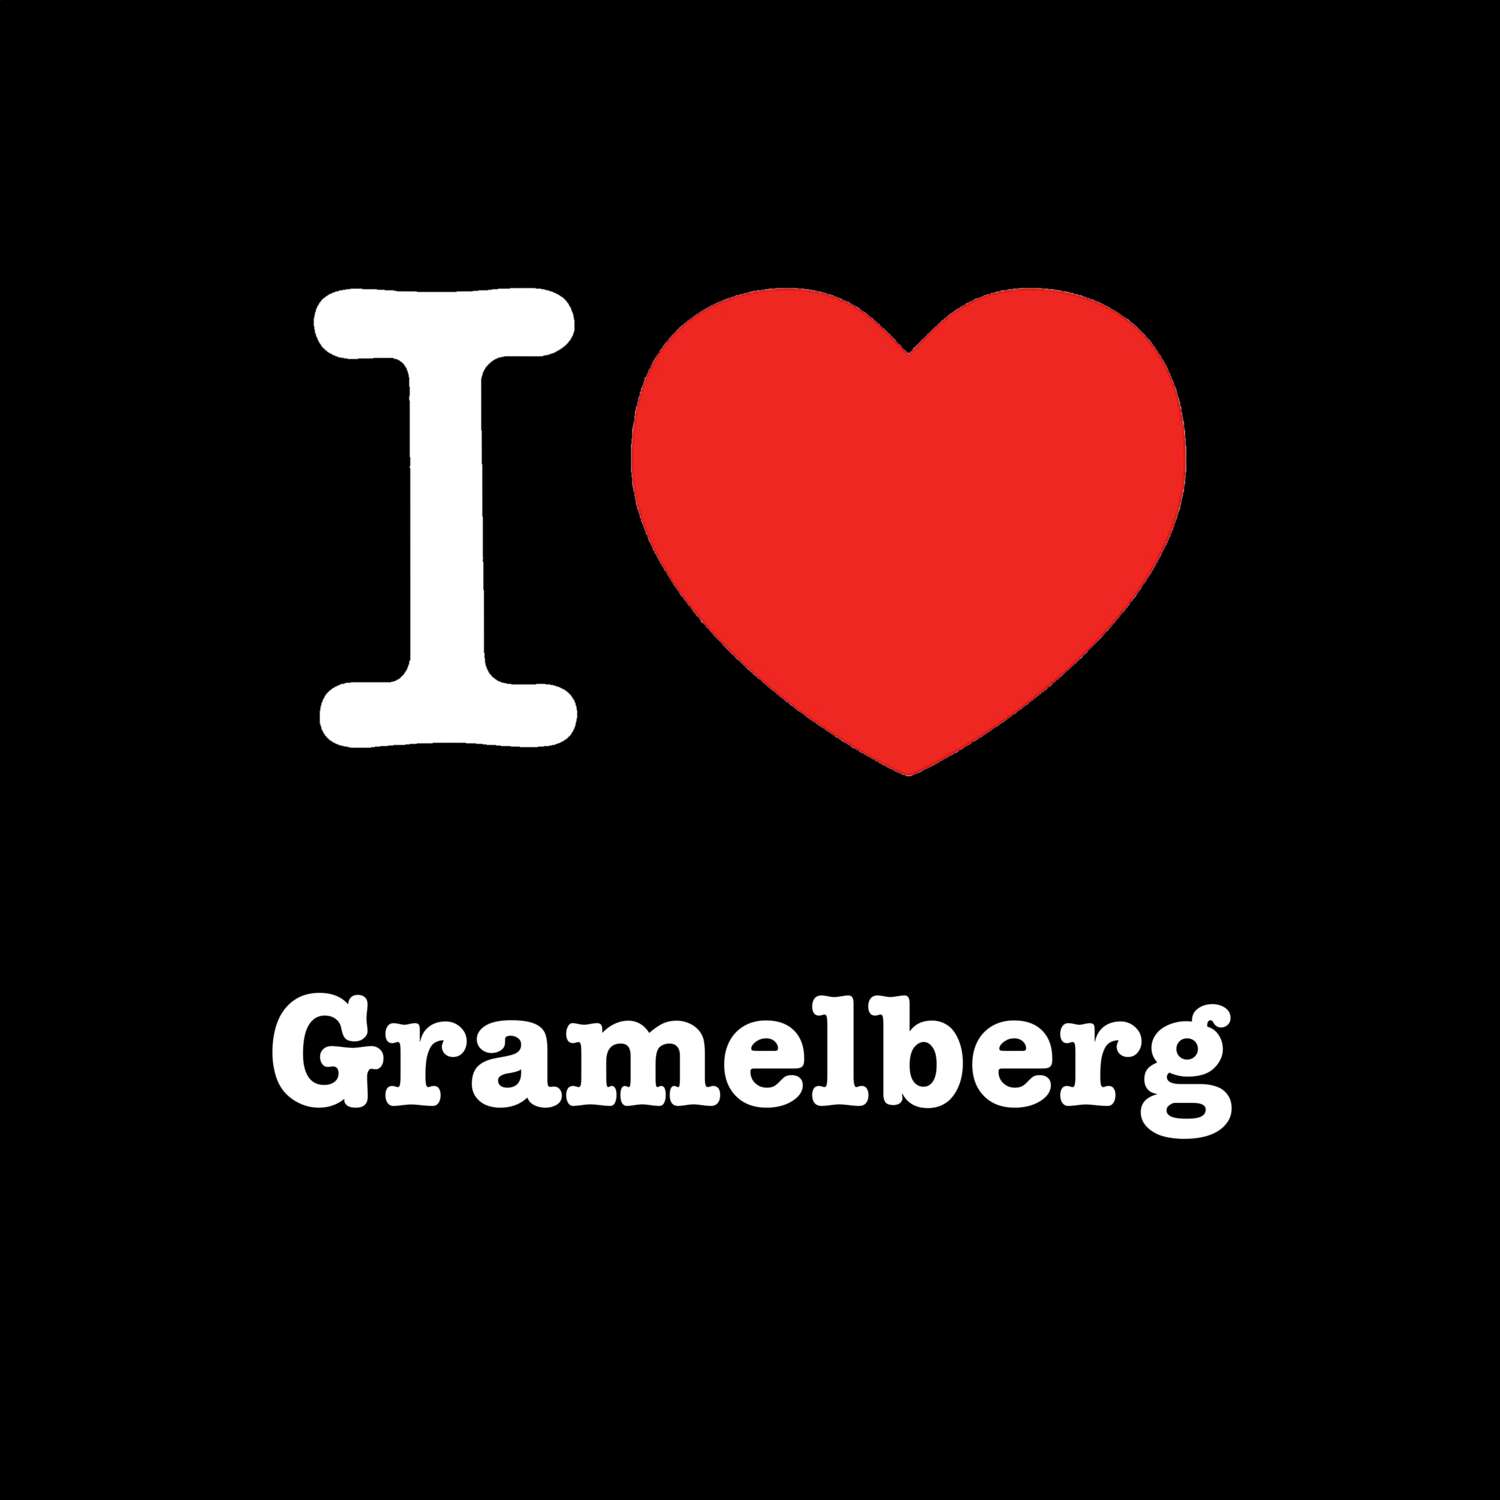 Gramelberg T-Shirt »I love«